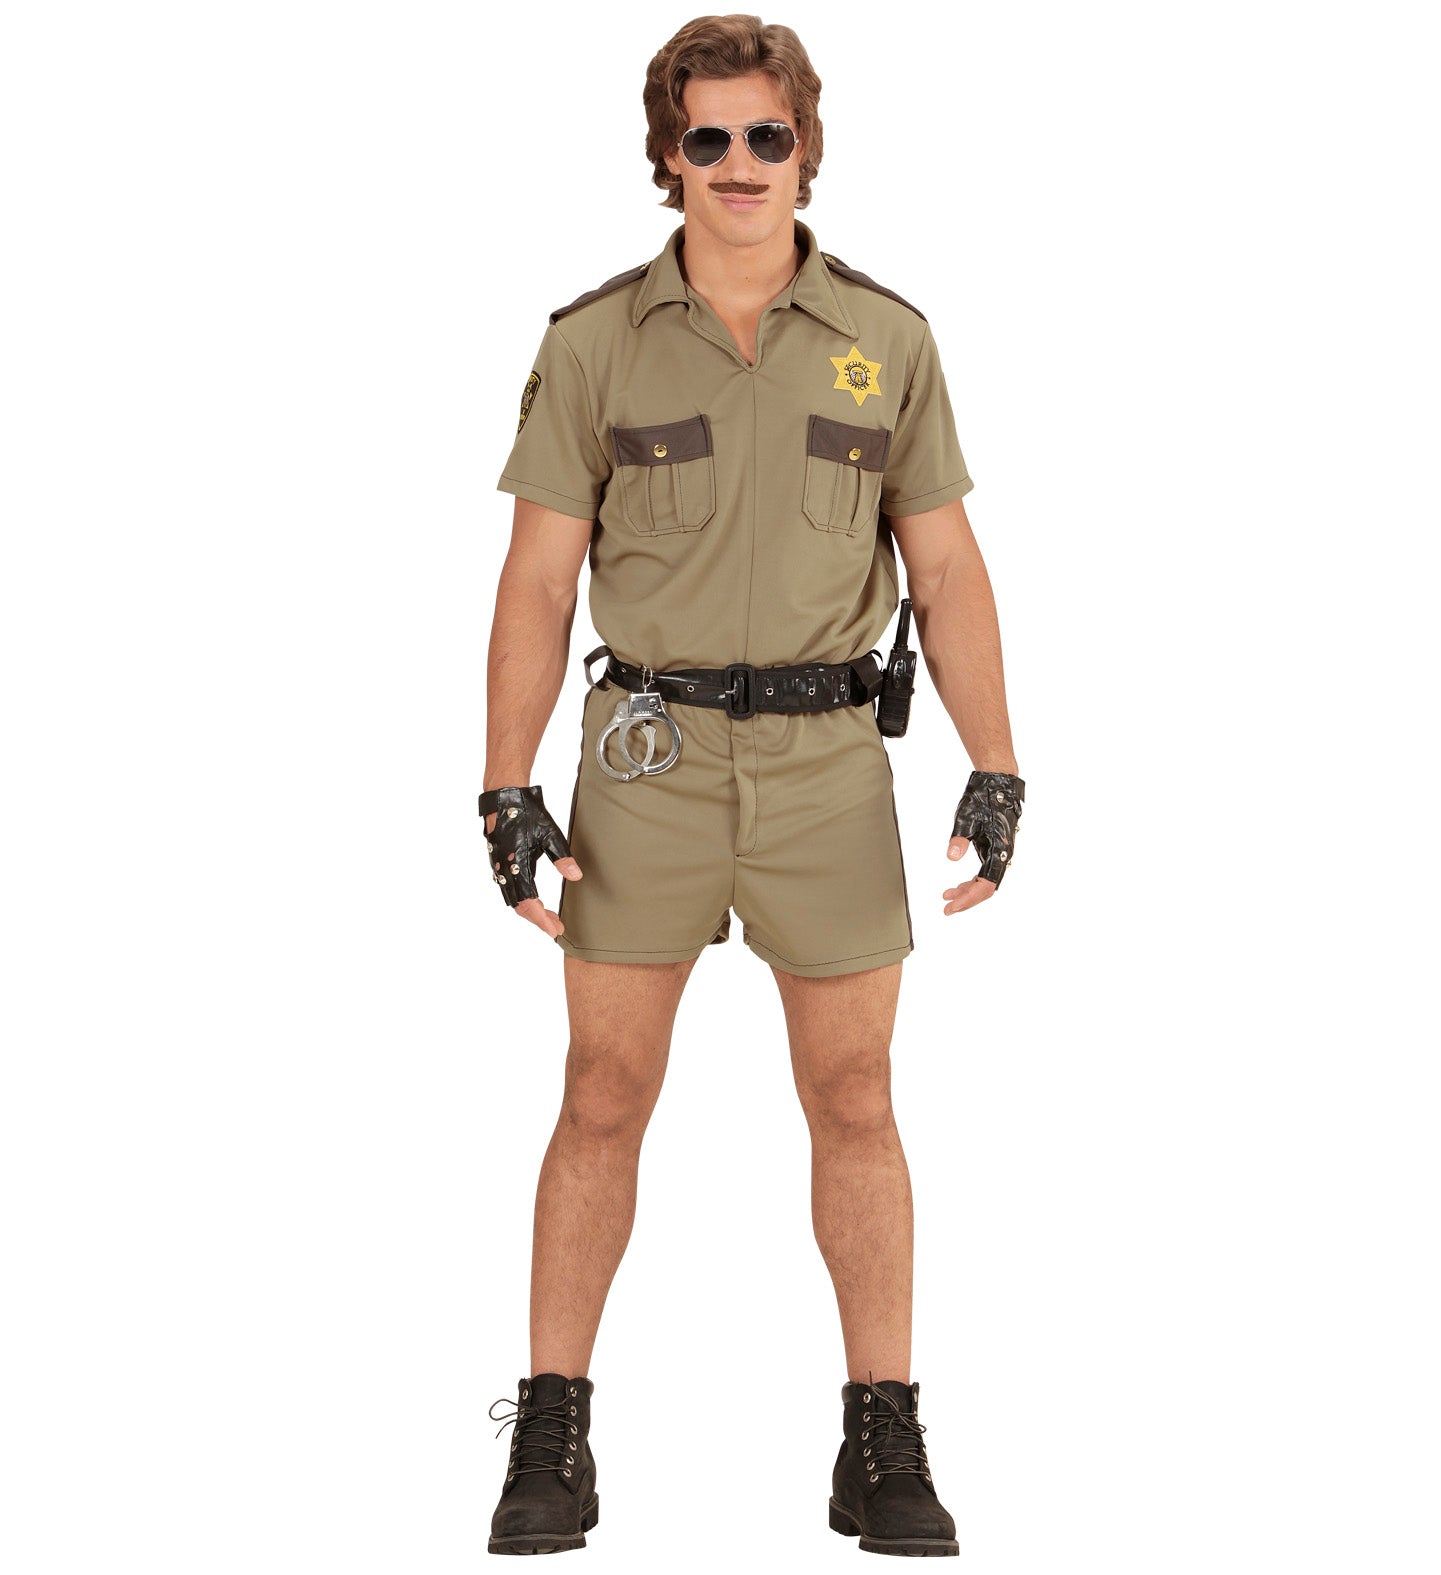 California Highway Patrol Officer Costume